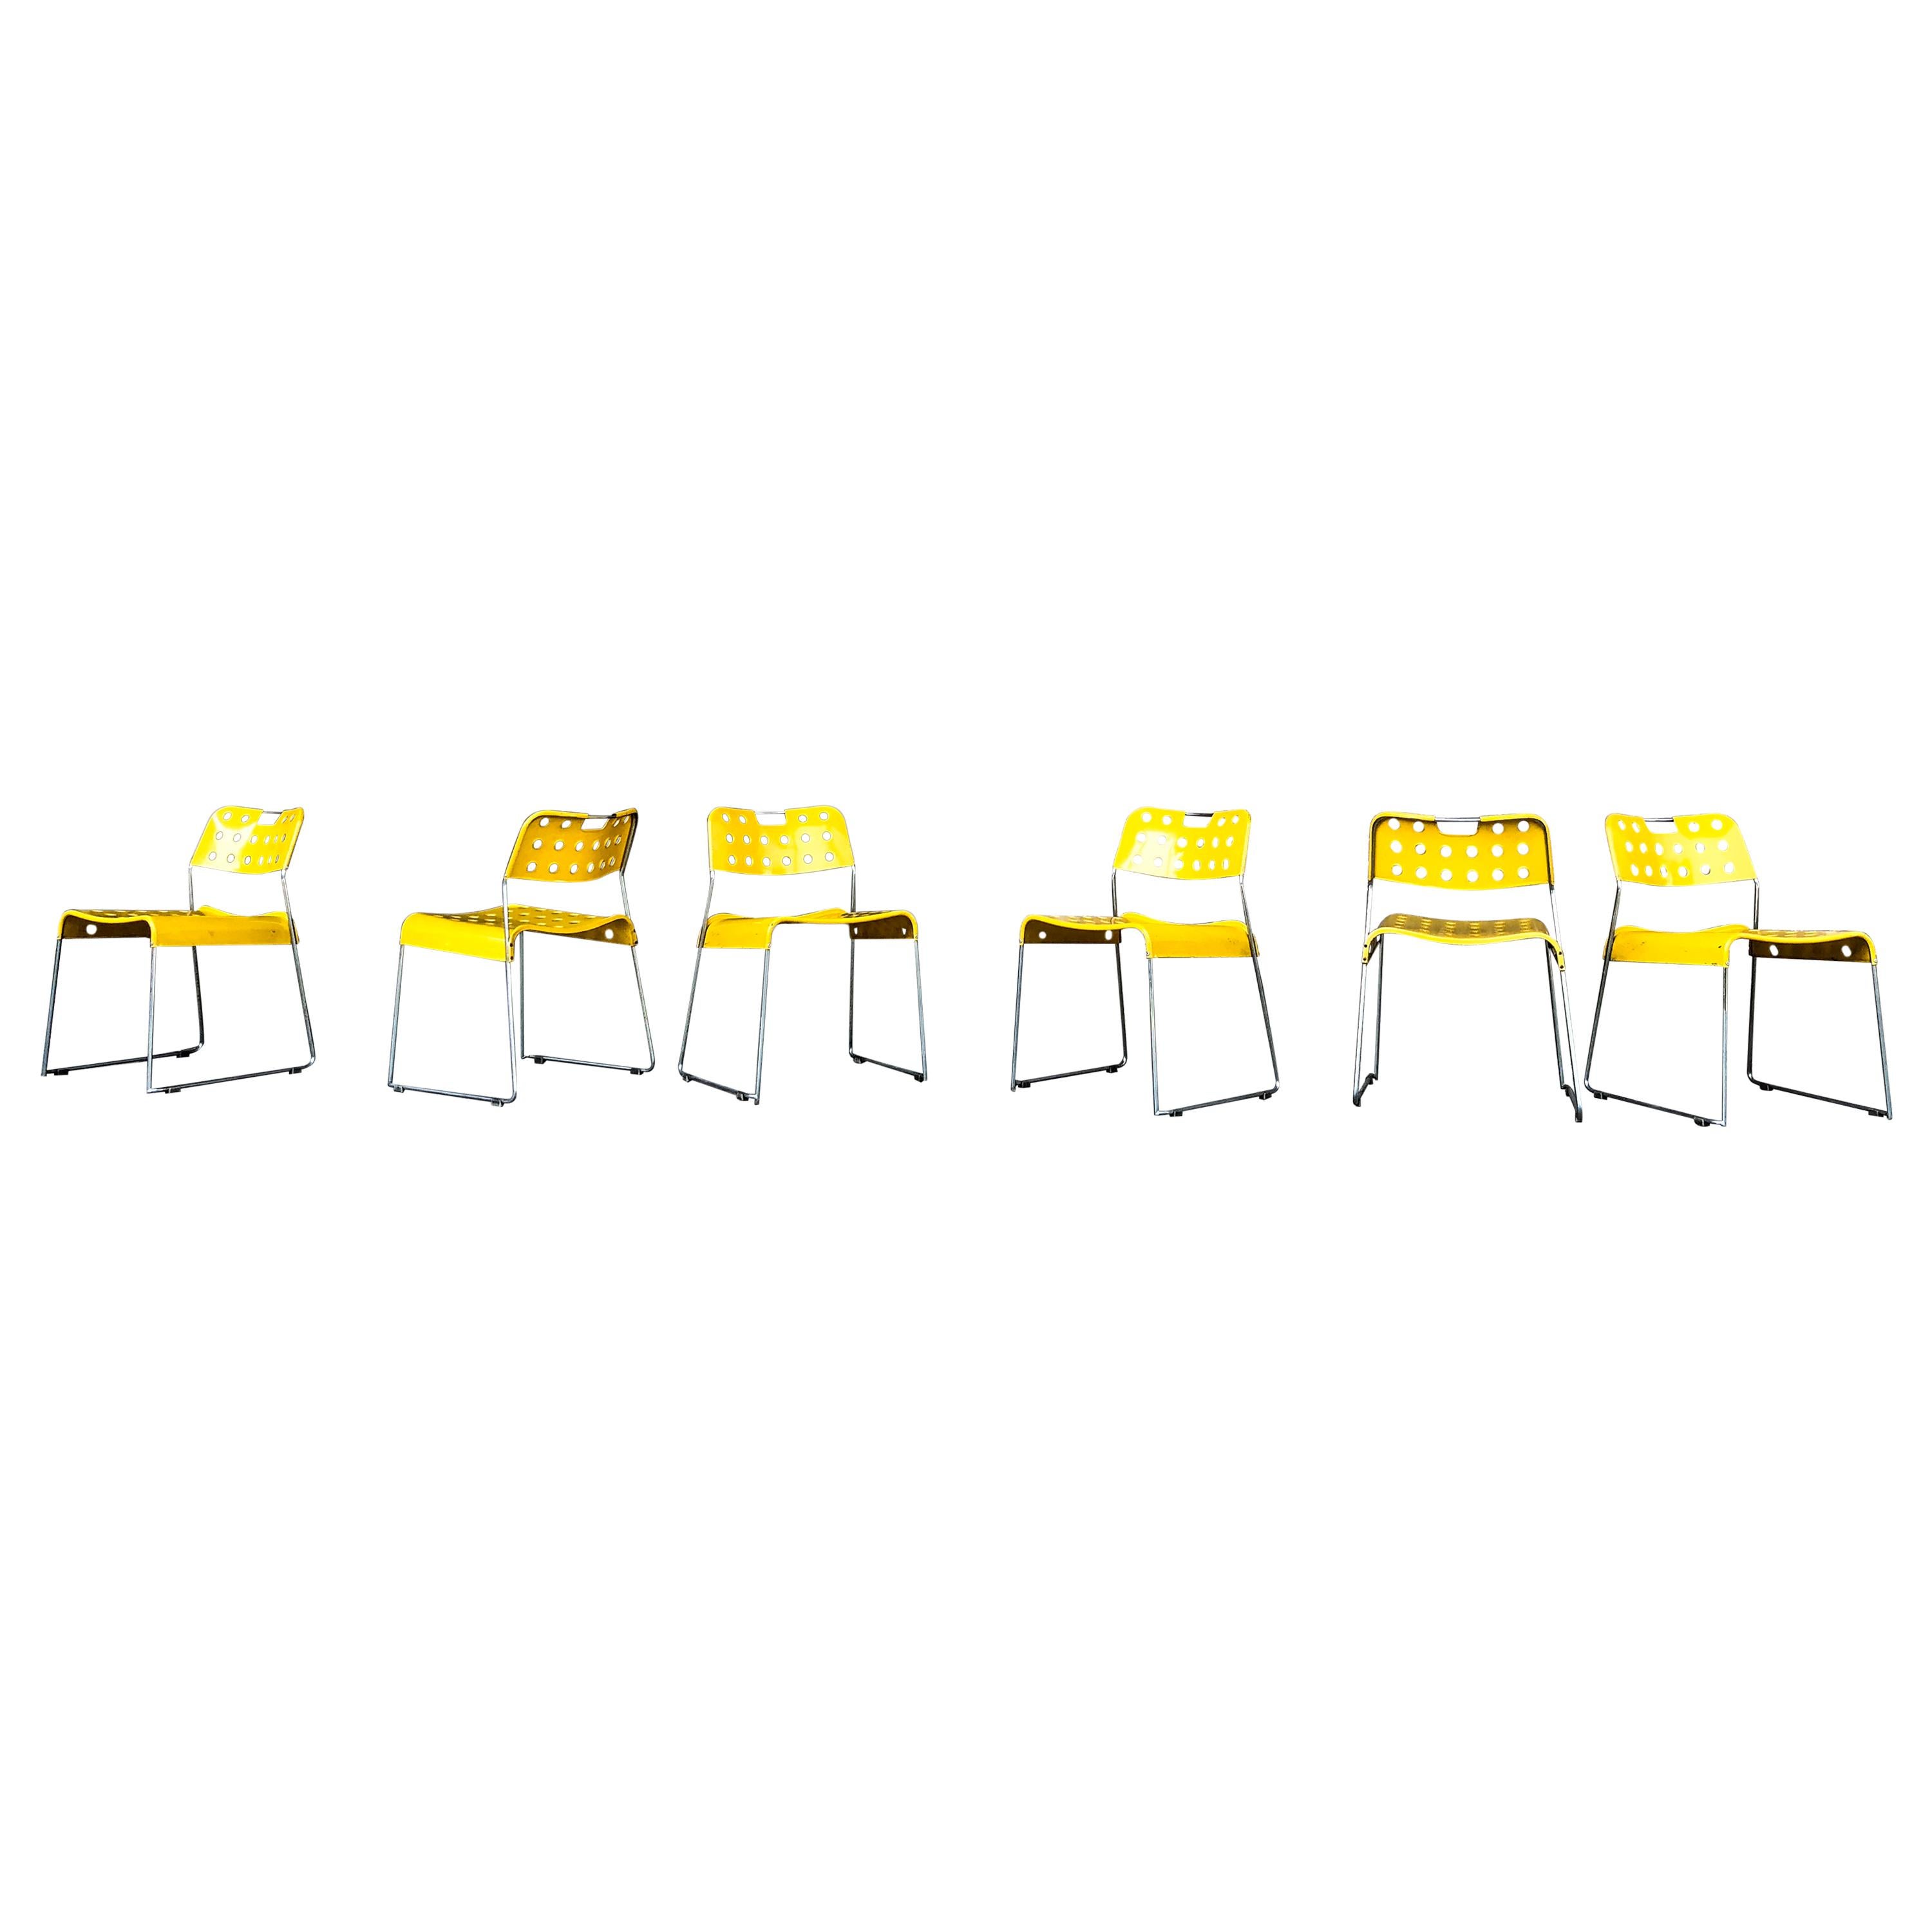 Rodney Kinsman Space Age Yellow Omstak Chair for Bieffeplast, 1971, Set 0f 18 For Sale 2